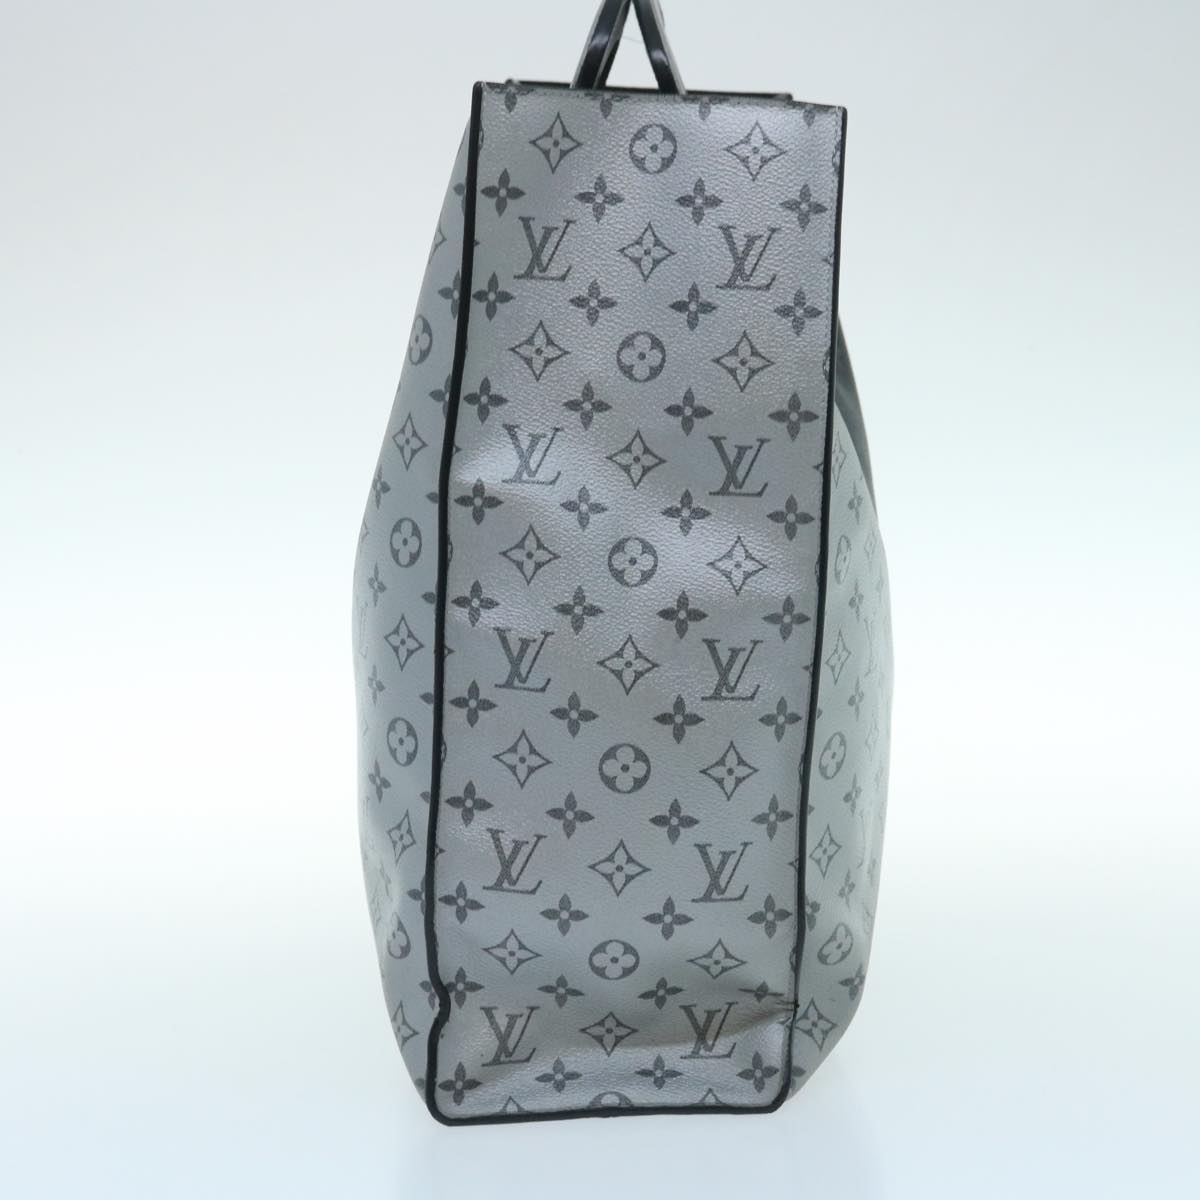 Louis Vuitton Monogram Split Tote Bag